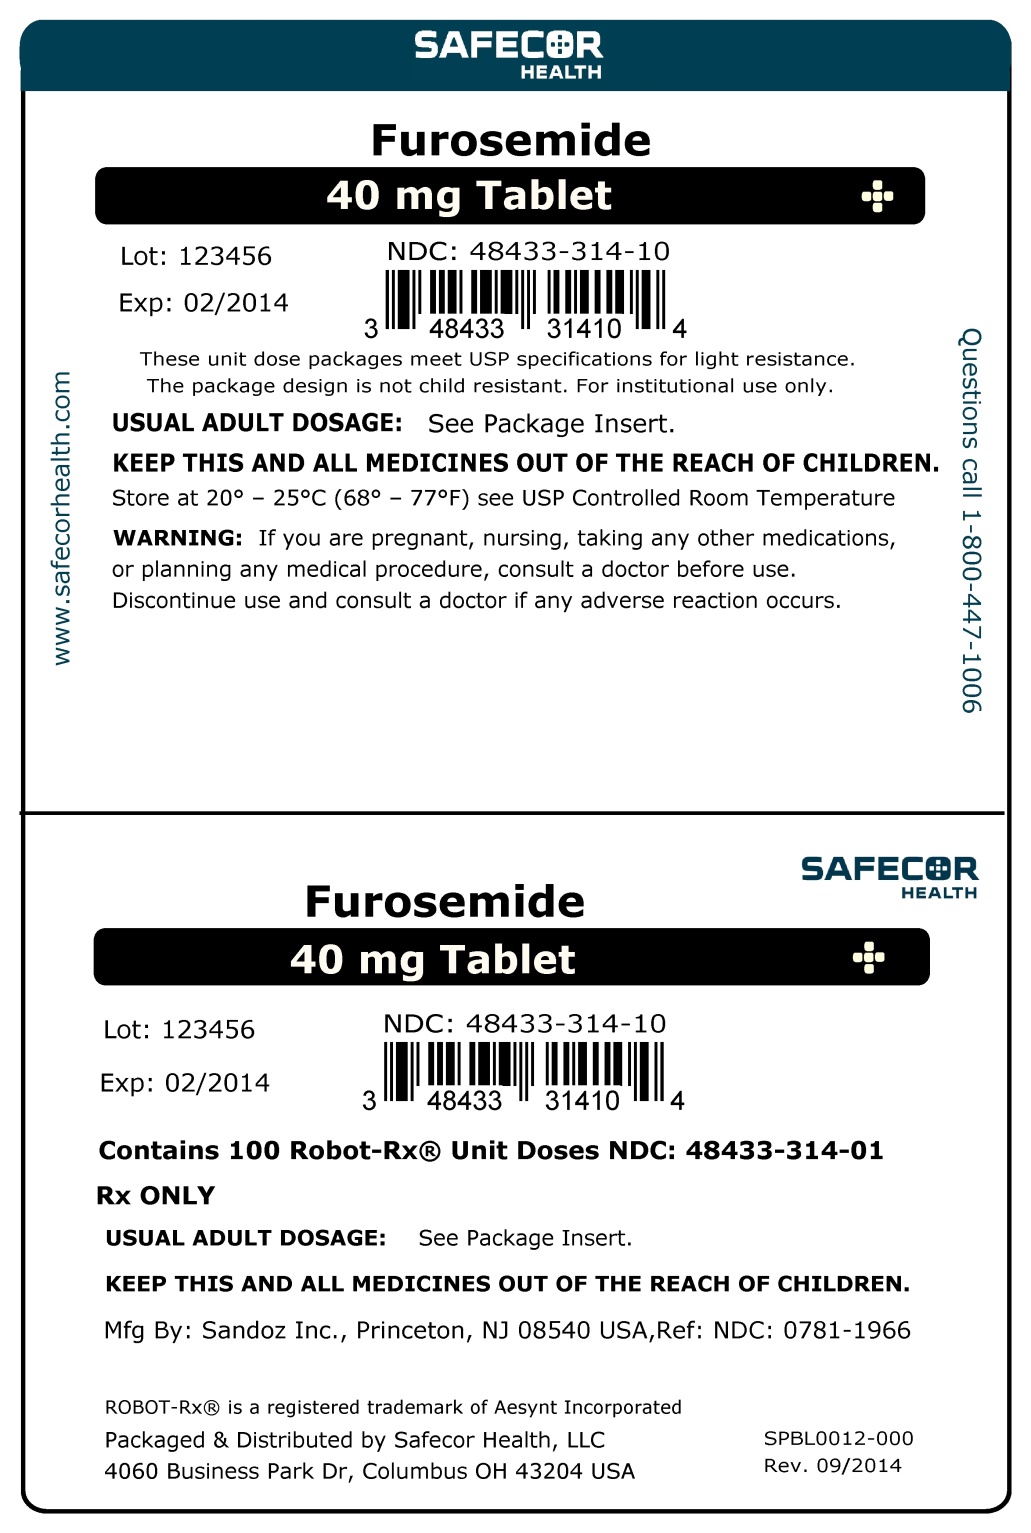 Furosemide 40 mg Robot Unit Dose Box Label